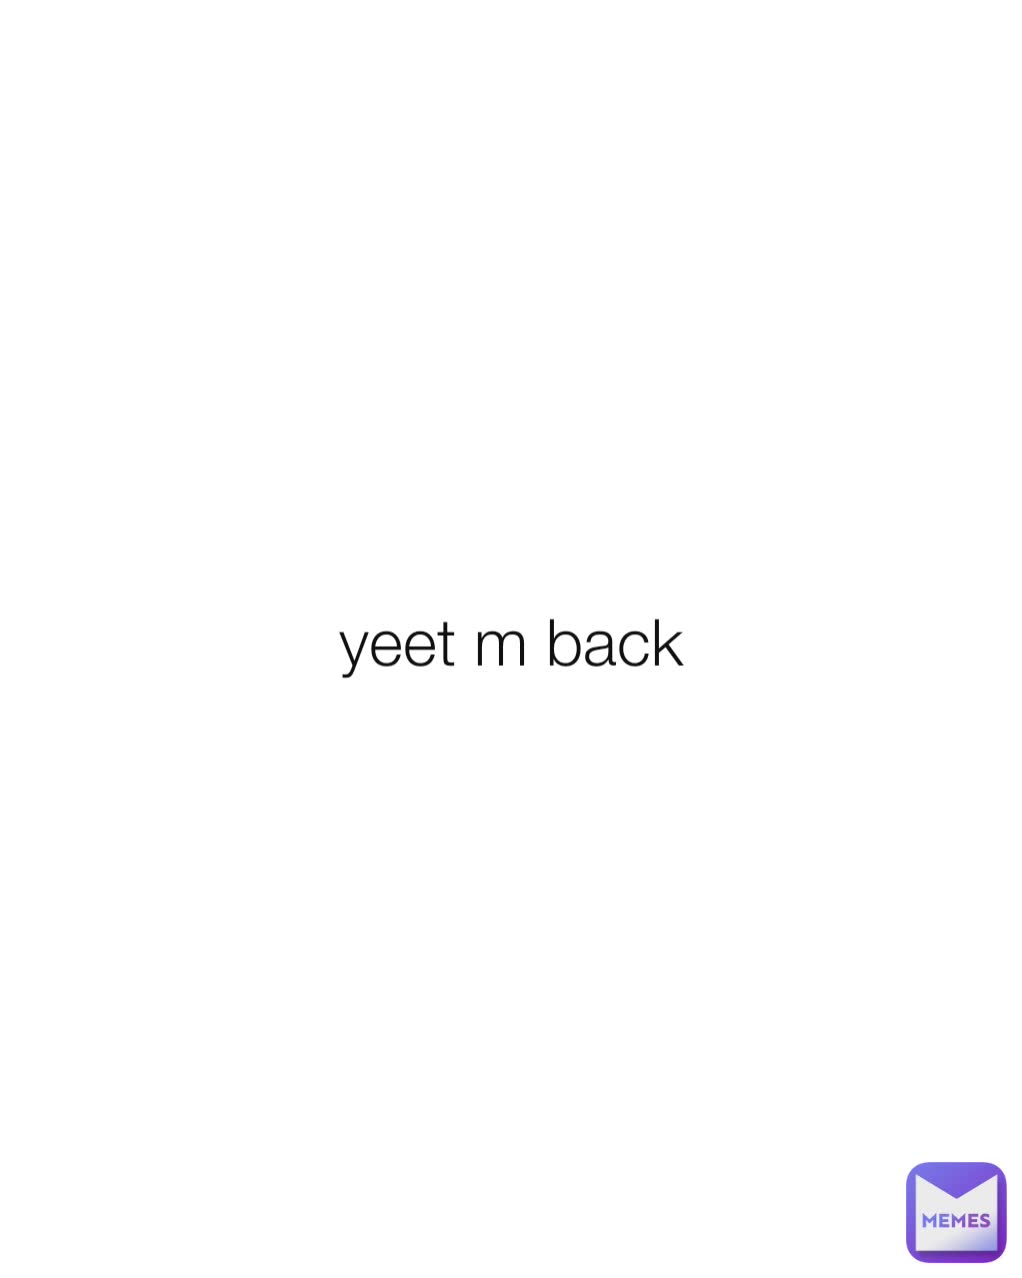 yeet m back